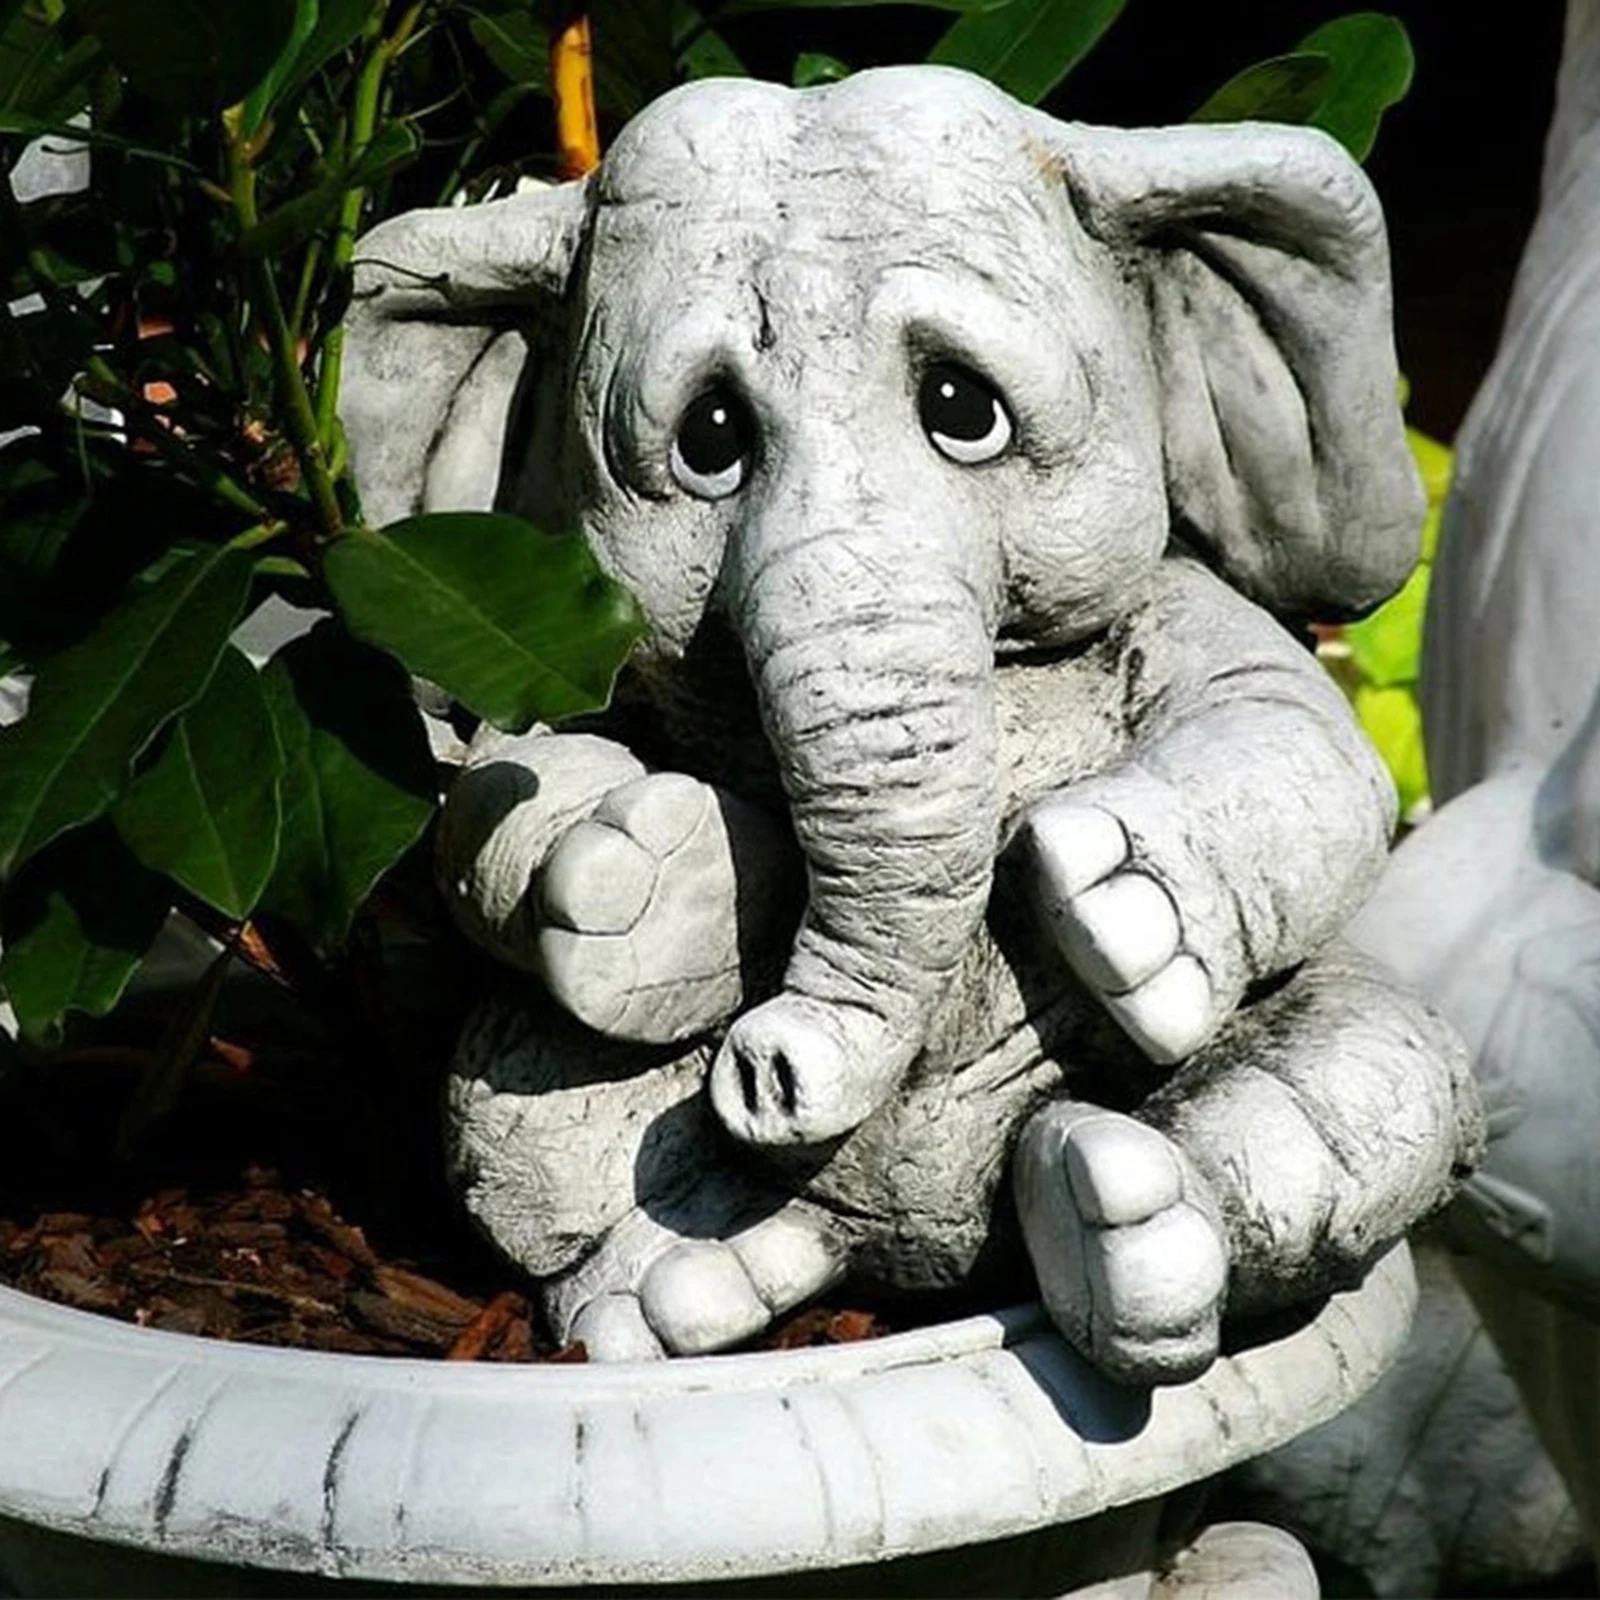 Sitting Elephants Figurine Decor Gardening Statues Accessories Indoor Outdoor Home Office Garden Lawn Decor Ornament